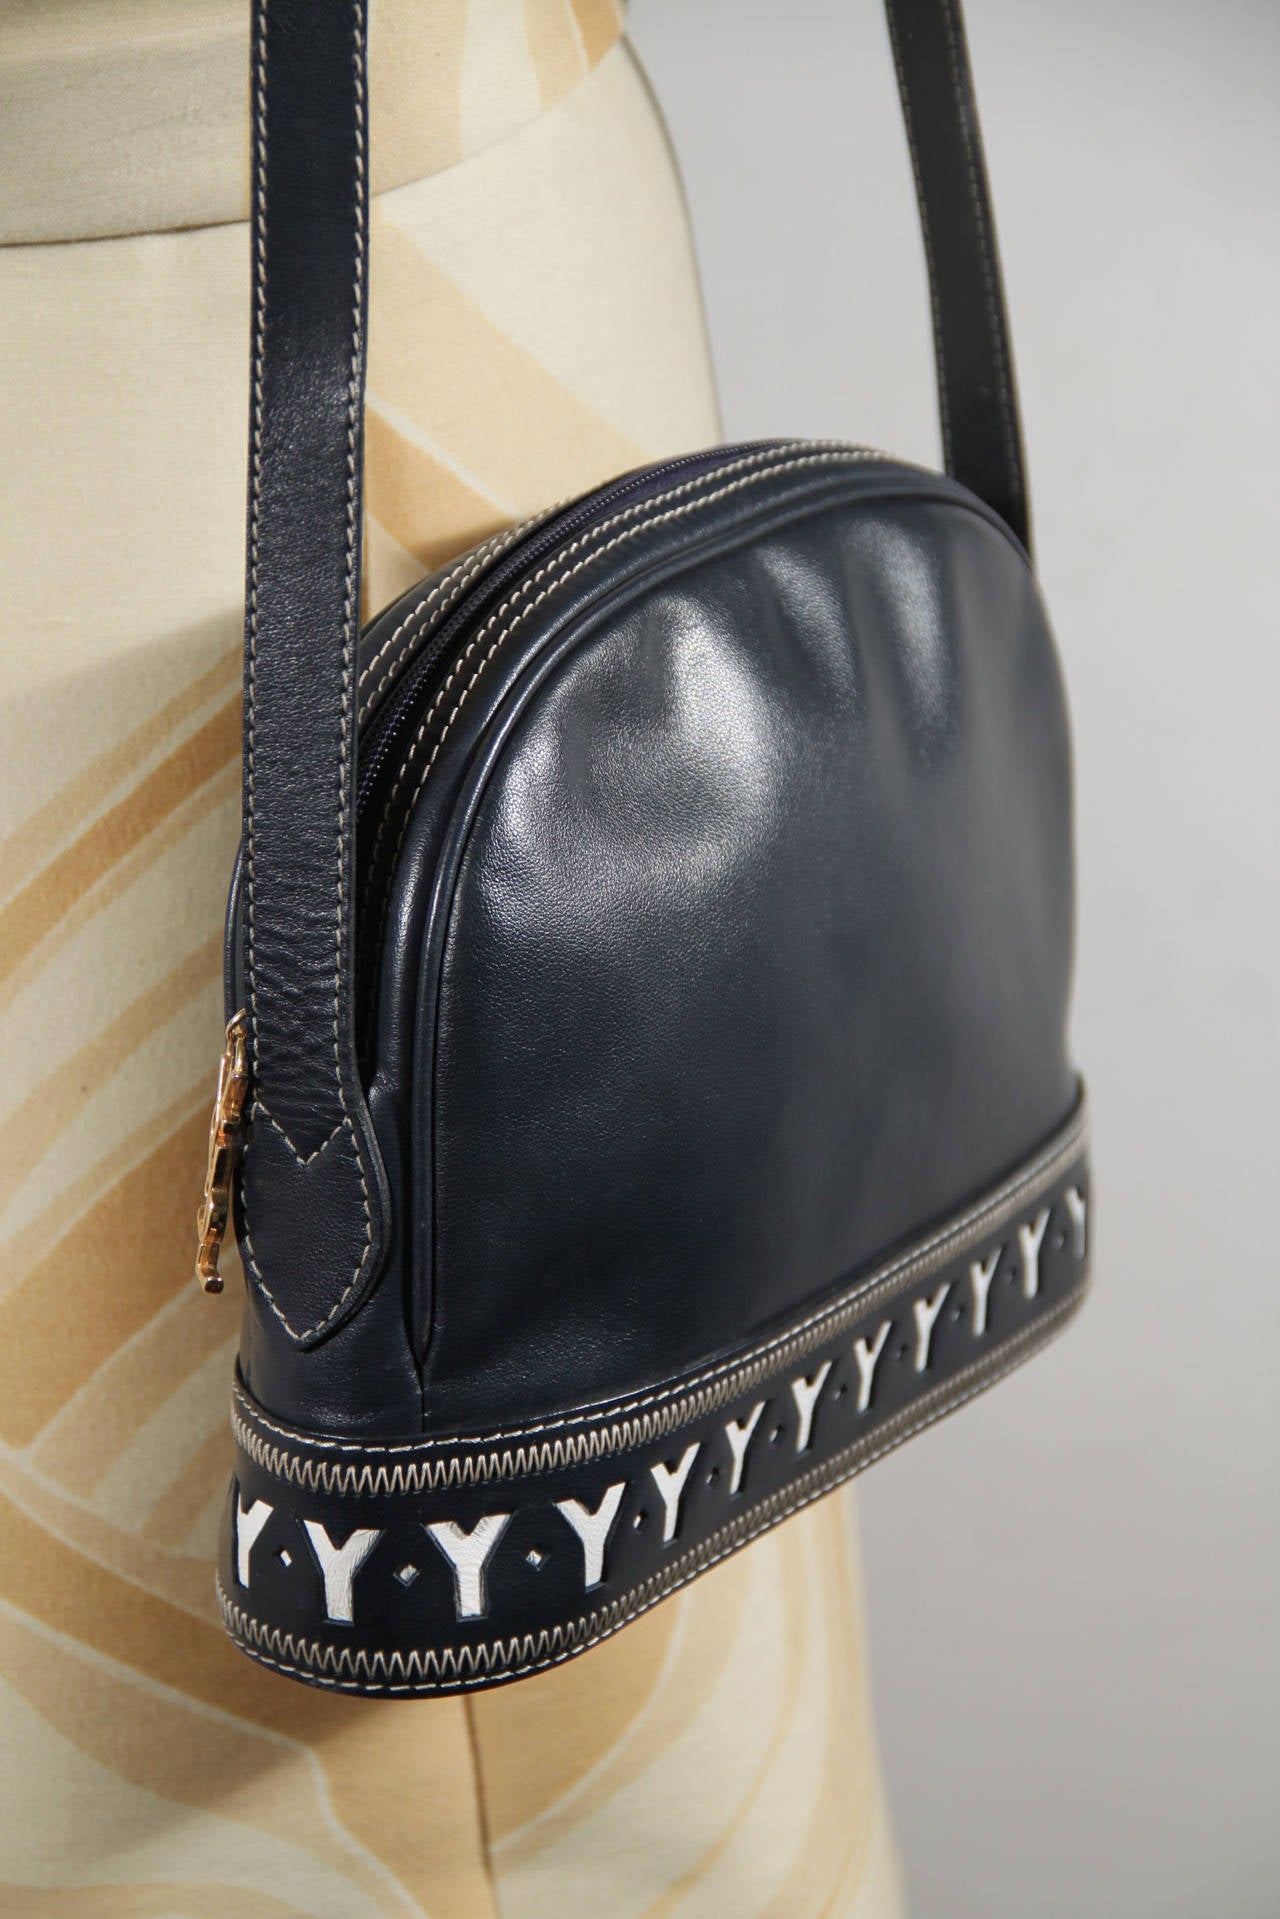 ysl white leather handbag messenger  